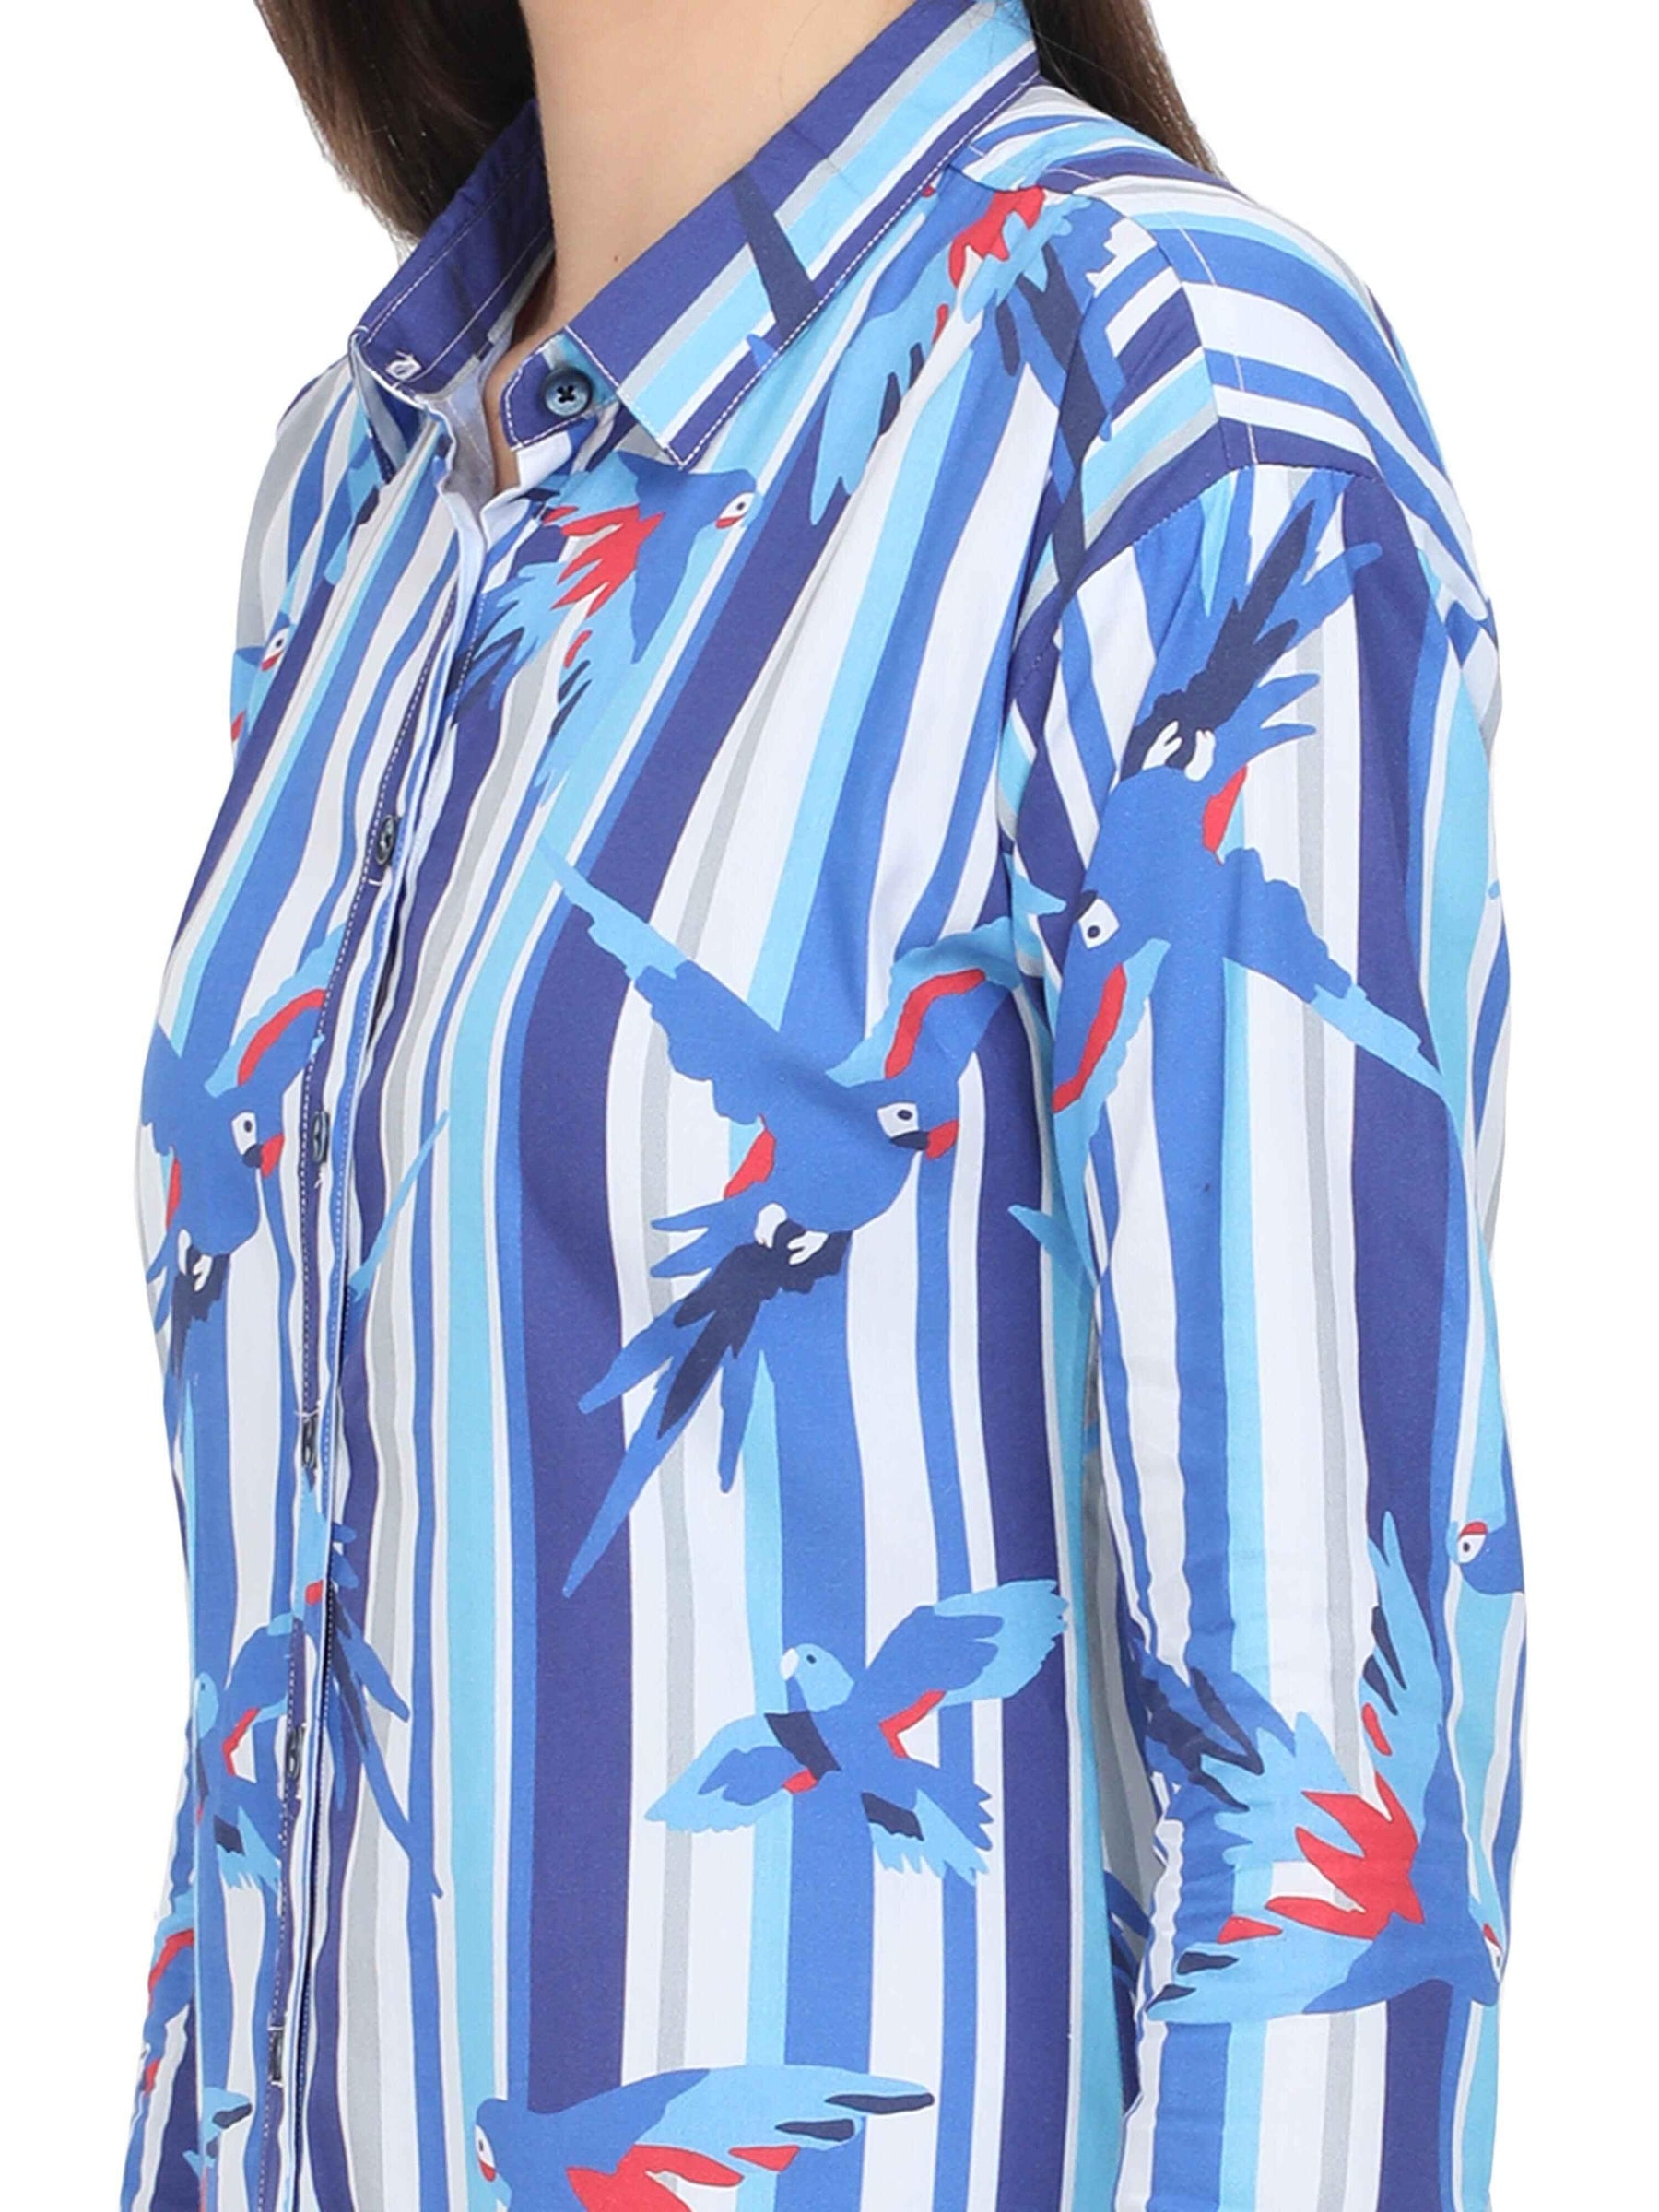 Sky Blue Digital Printed Tailored Fit Long Shirt - Guniaa Fashions